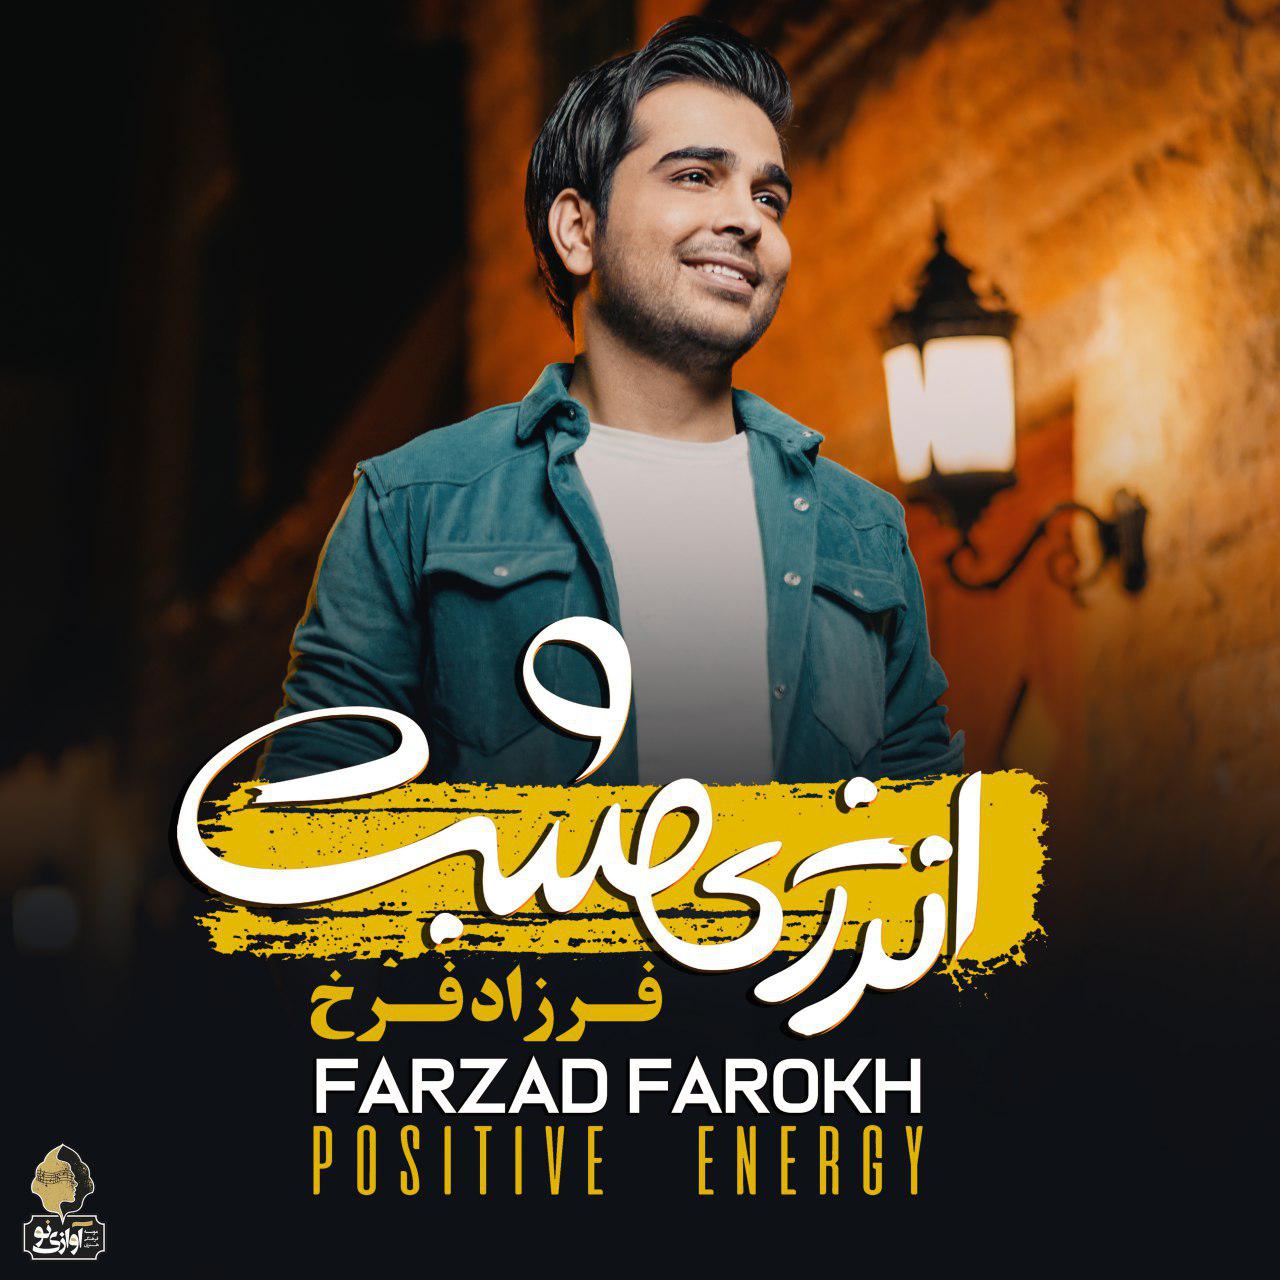  دانلود آهنگ جدید فرزاد فرخ - قلبم باهاته | Download New Music By Farzad Farokh - Ghalbam Bahate